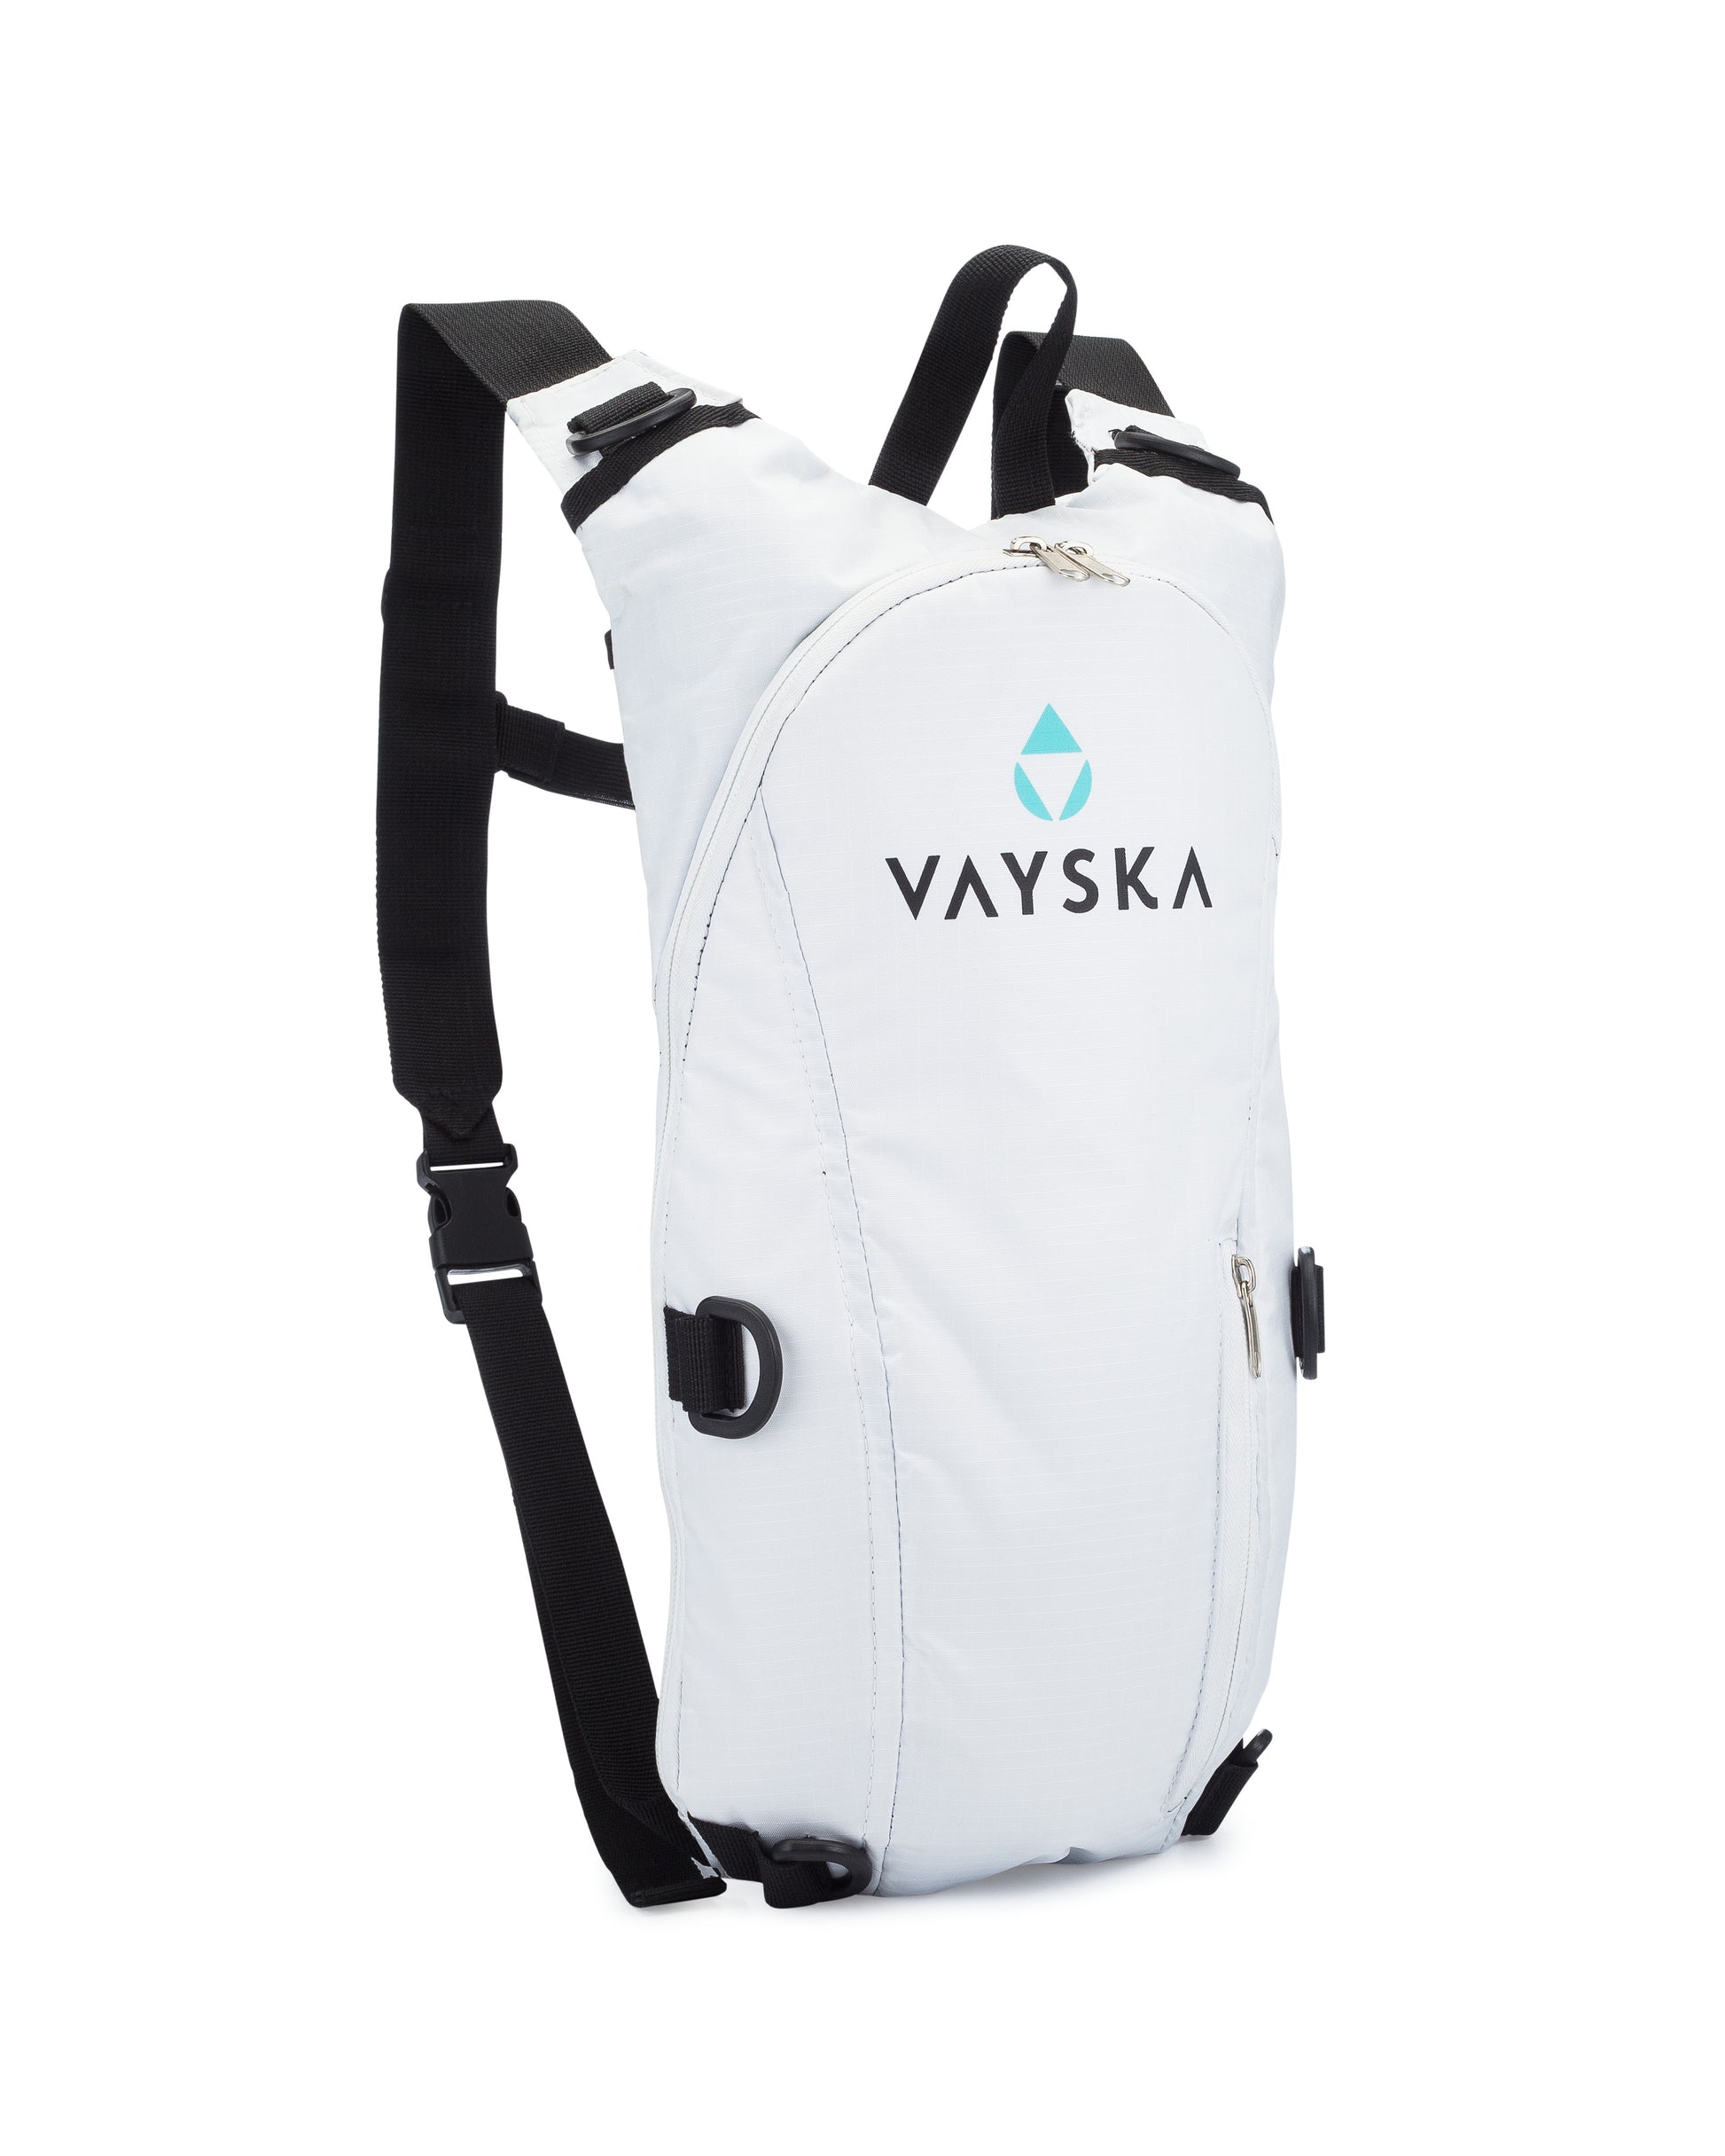 A white vayska bag with regular straps on a white background.